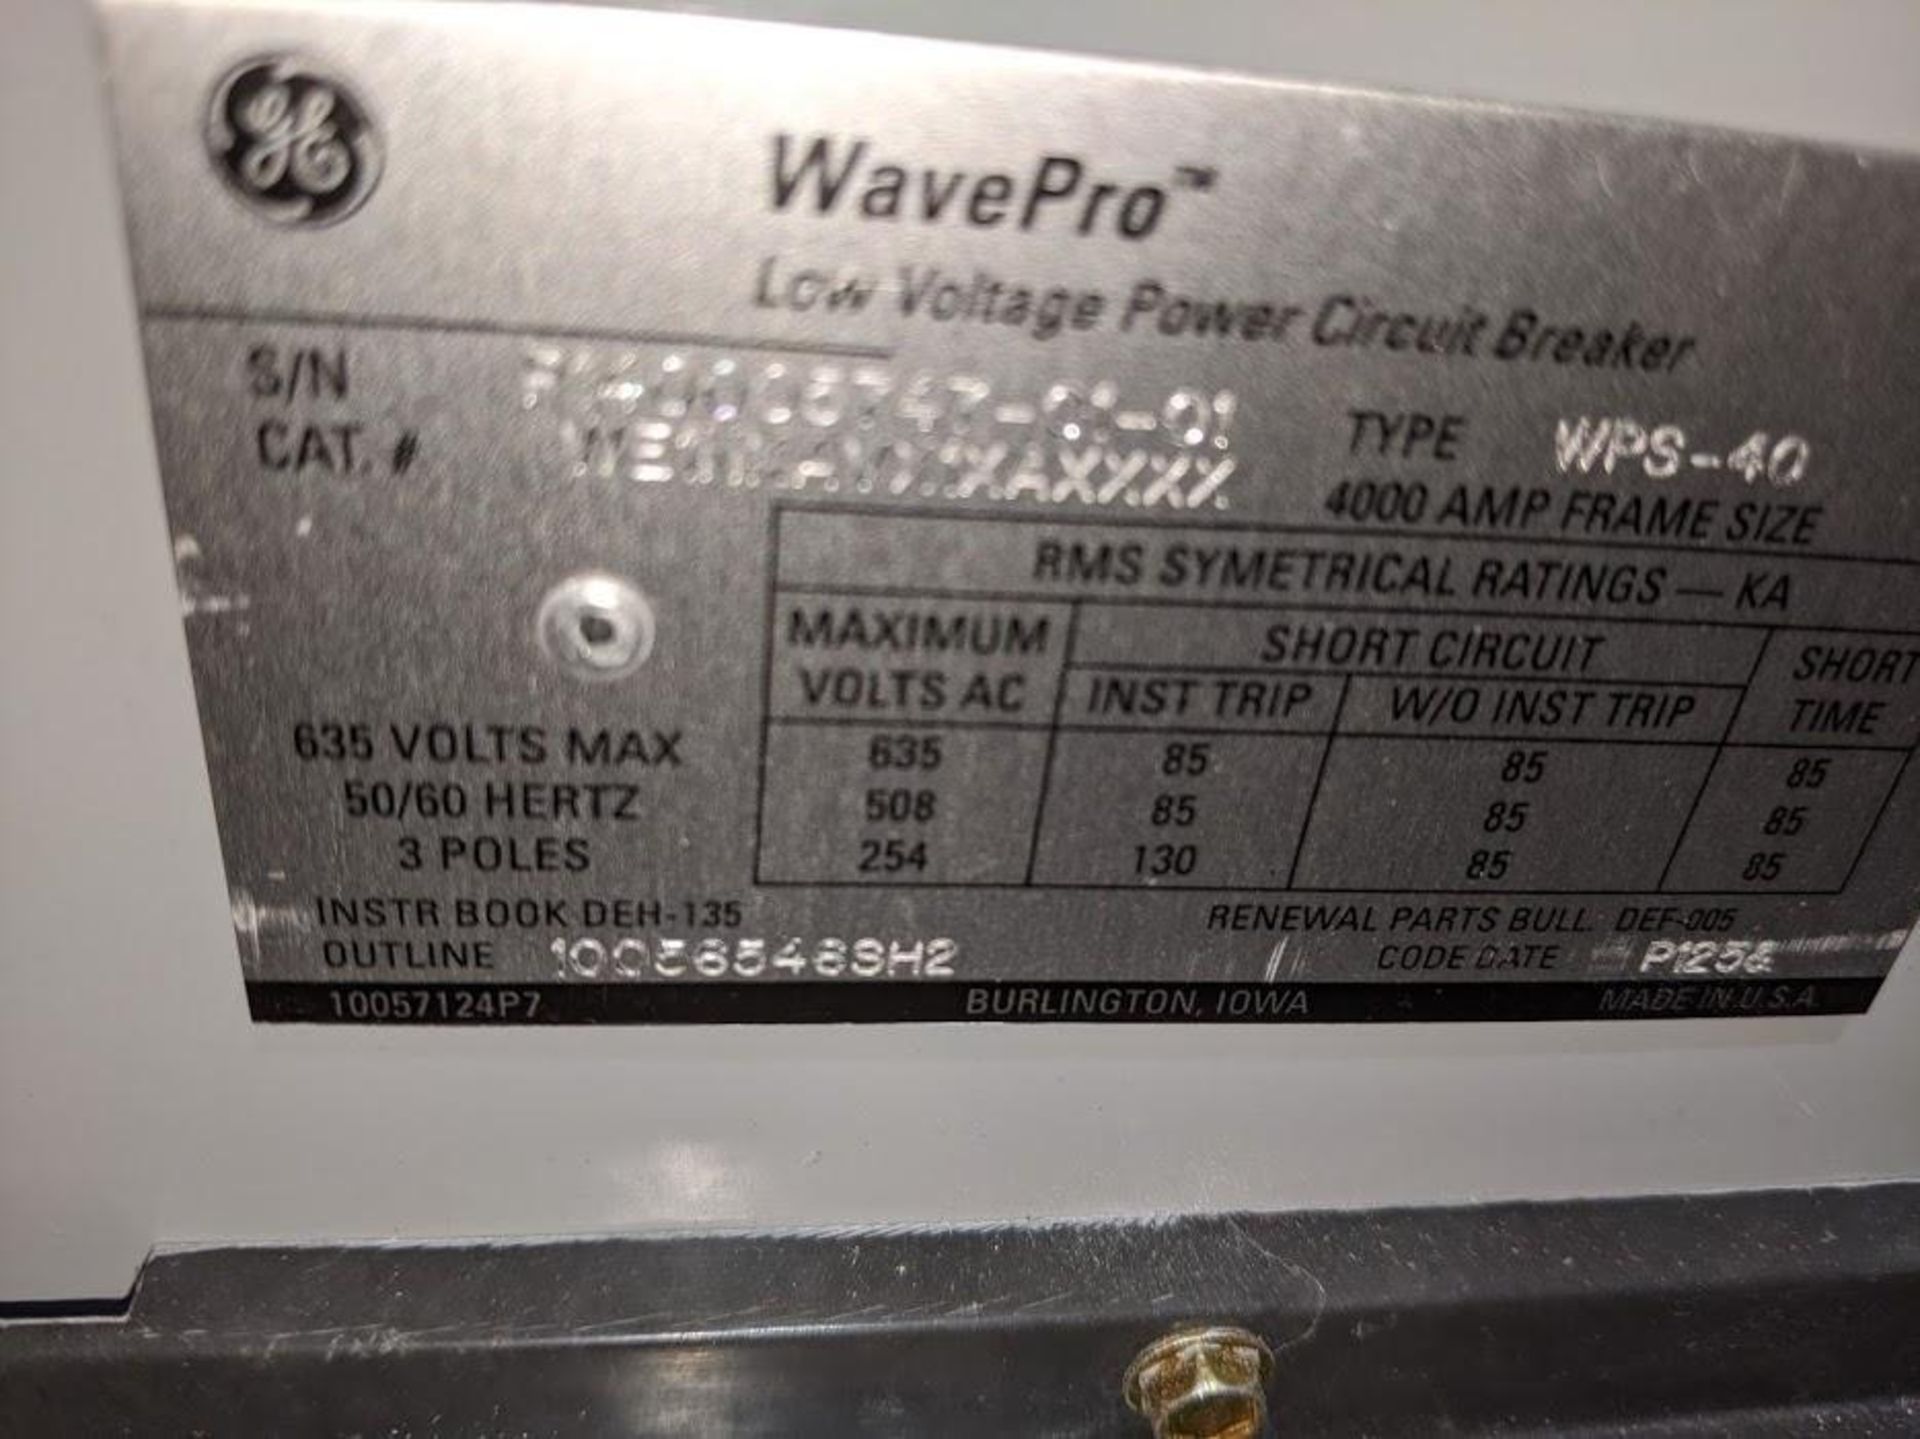 NEW GE 4000AMP WAVEPRO WE1 WPS-40 LV CIRCUIT BREAKER - Image 6 of 7